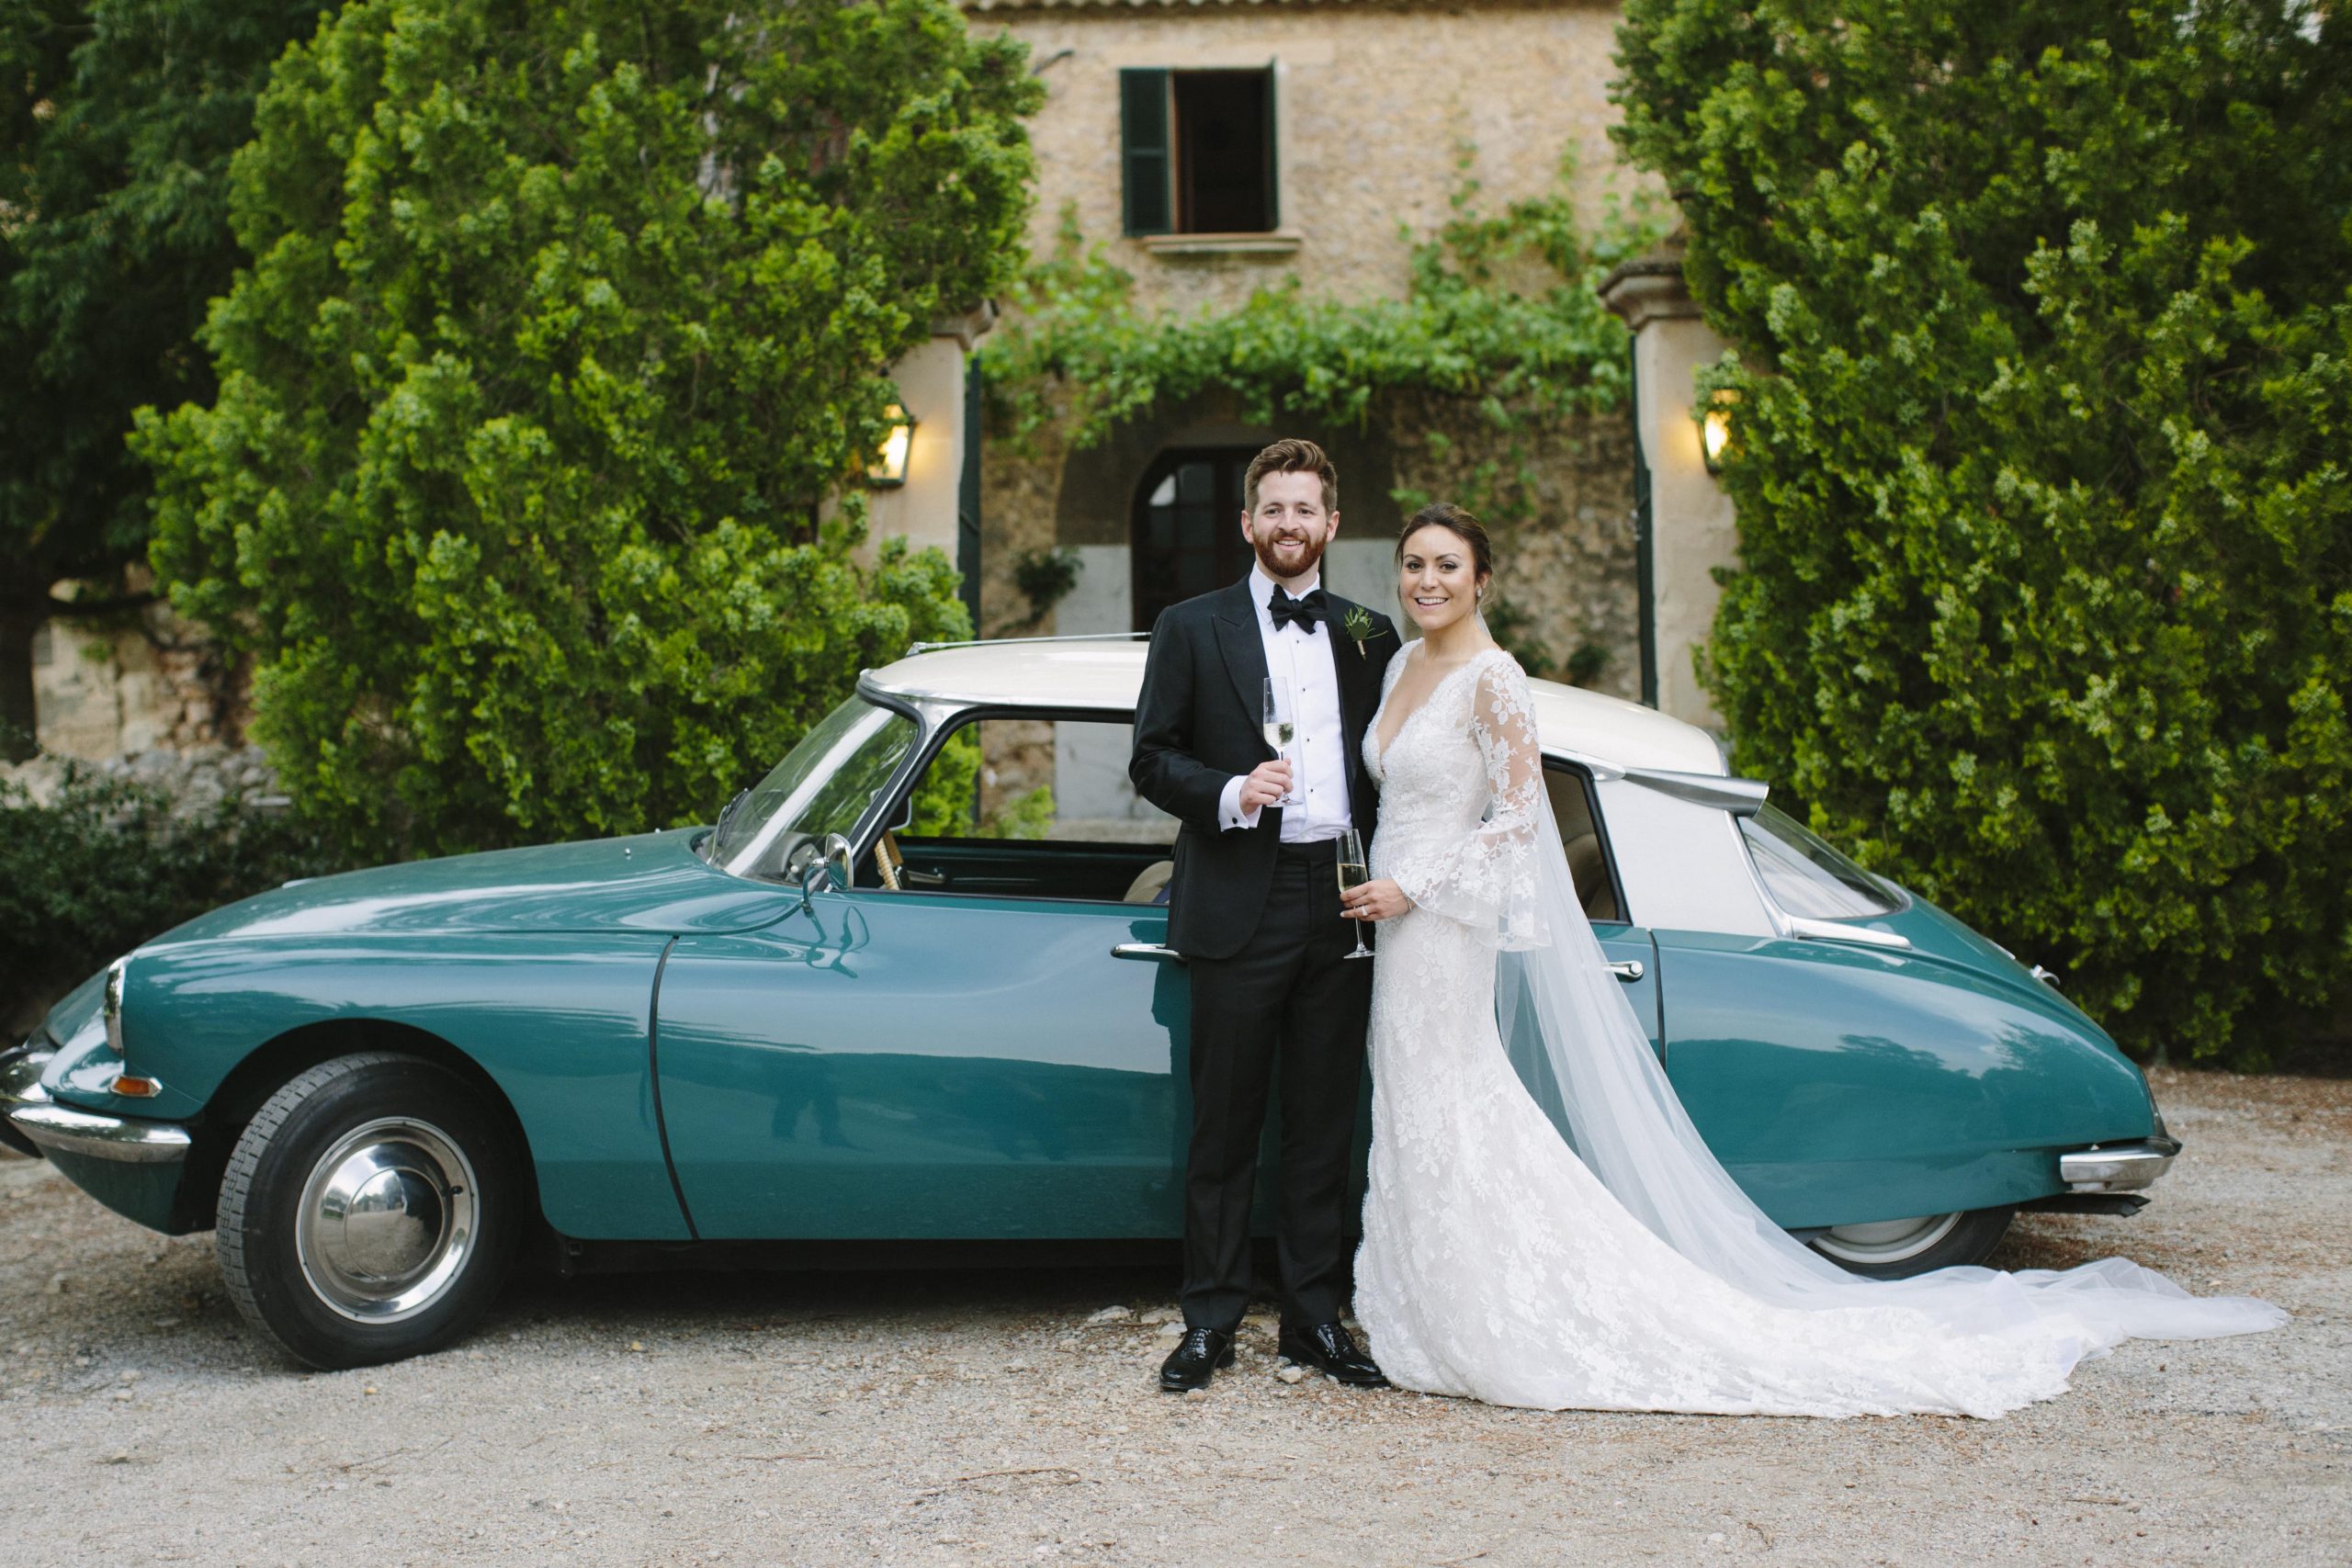 Wedding with a classic car